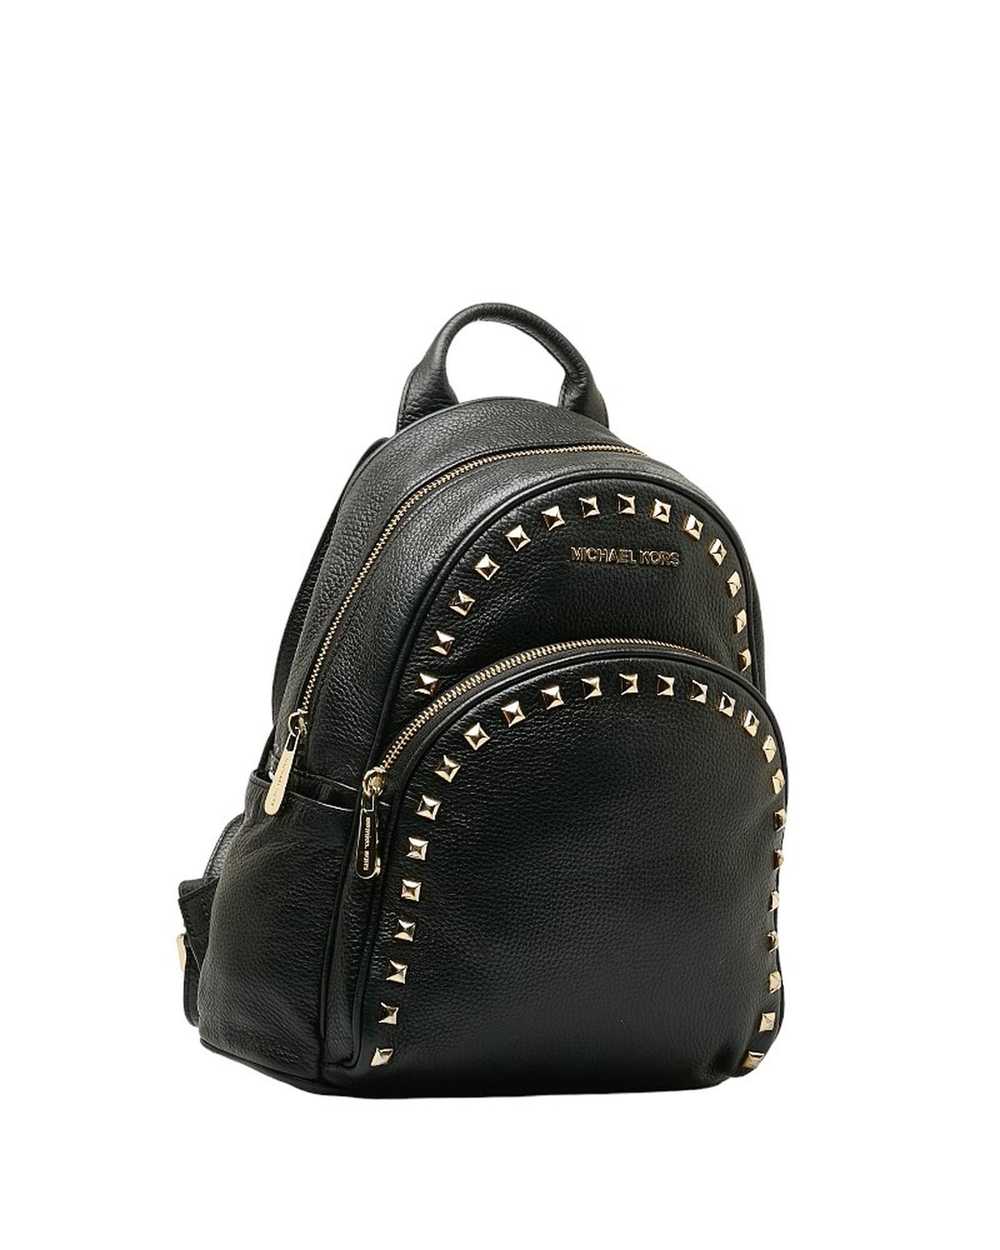 Michael Kors Studded Leather Abbey Backpack Bag - image 2